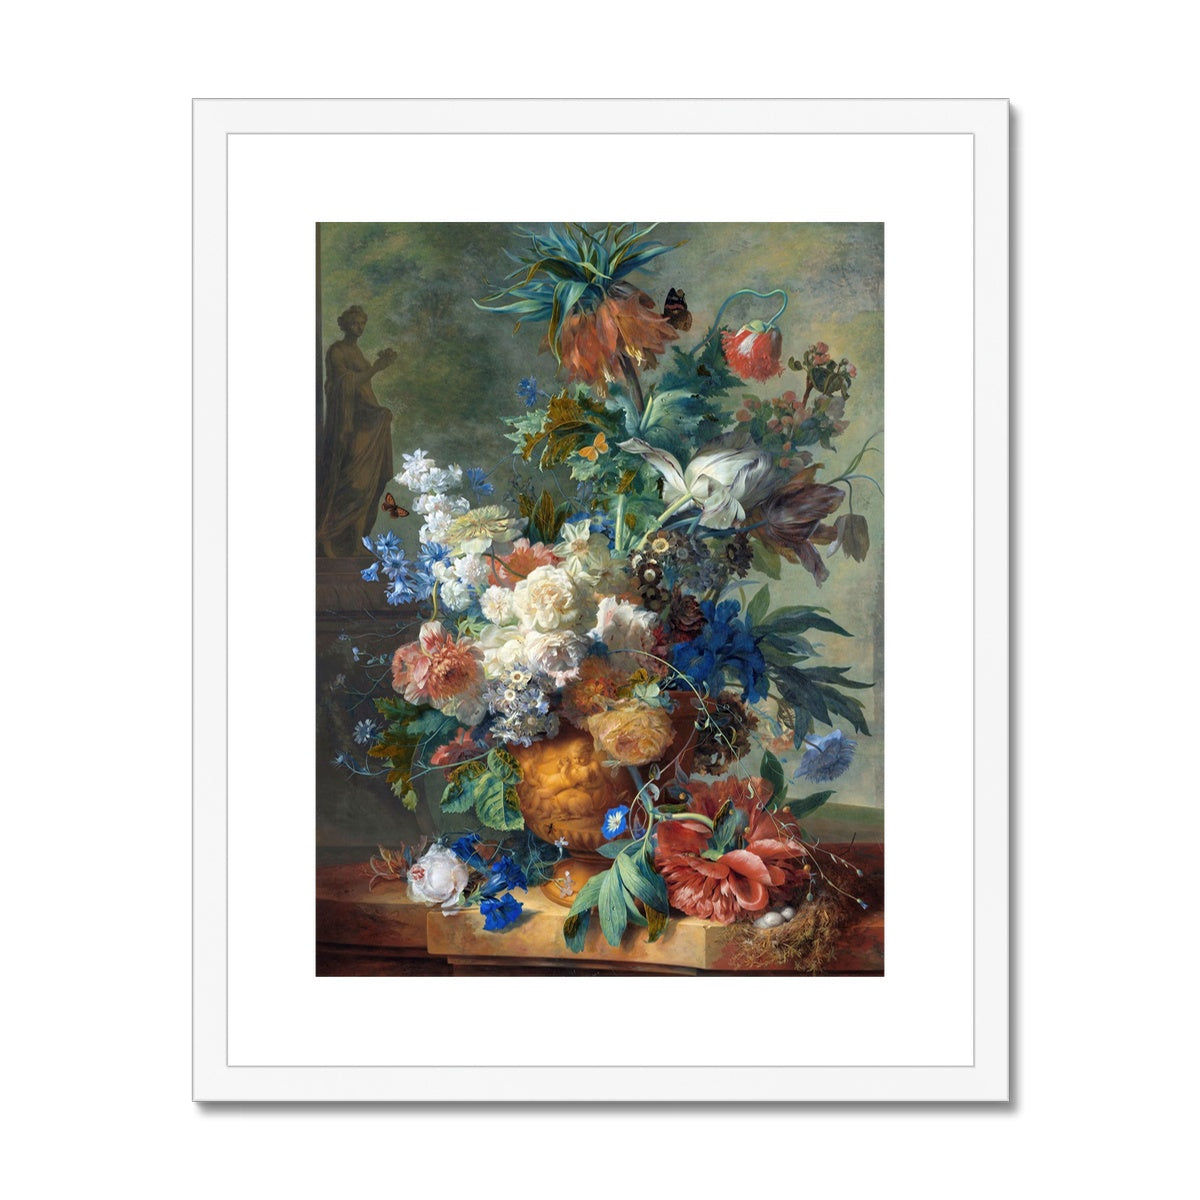 Jan van Huysum Framed Open Edition Art Print. 'Still Life with Flowers'. Art Gallery Historic Art